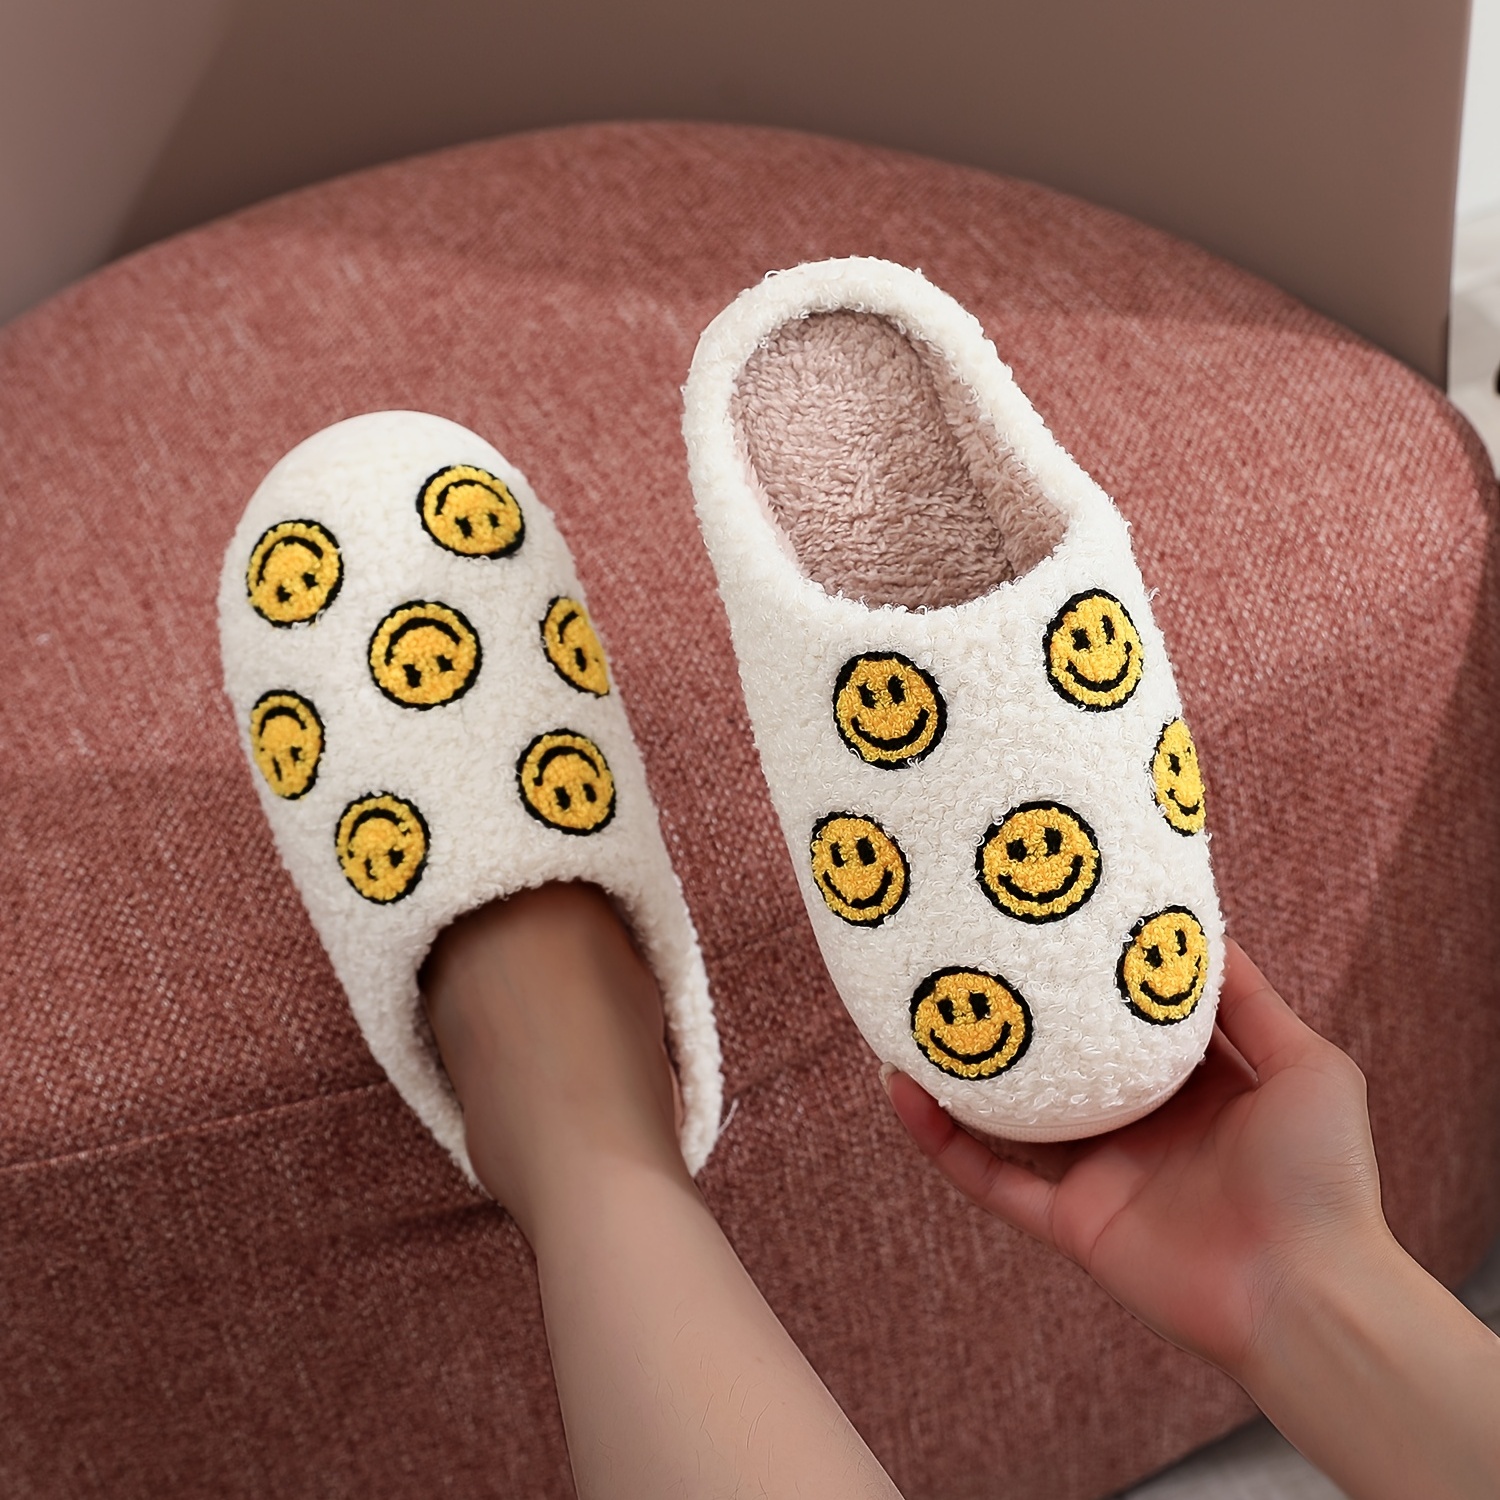 Kawaii Design Smiling Face Slippers, Warm Slip On Soft Plush Cozy